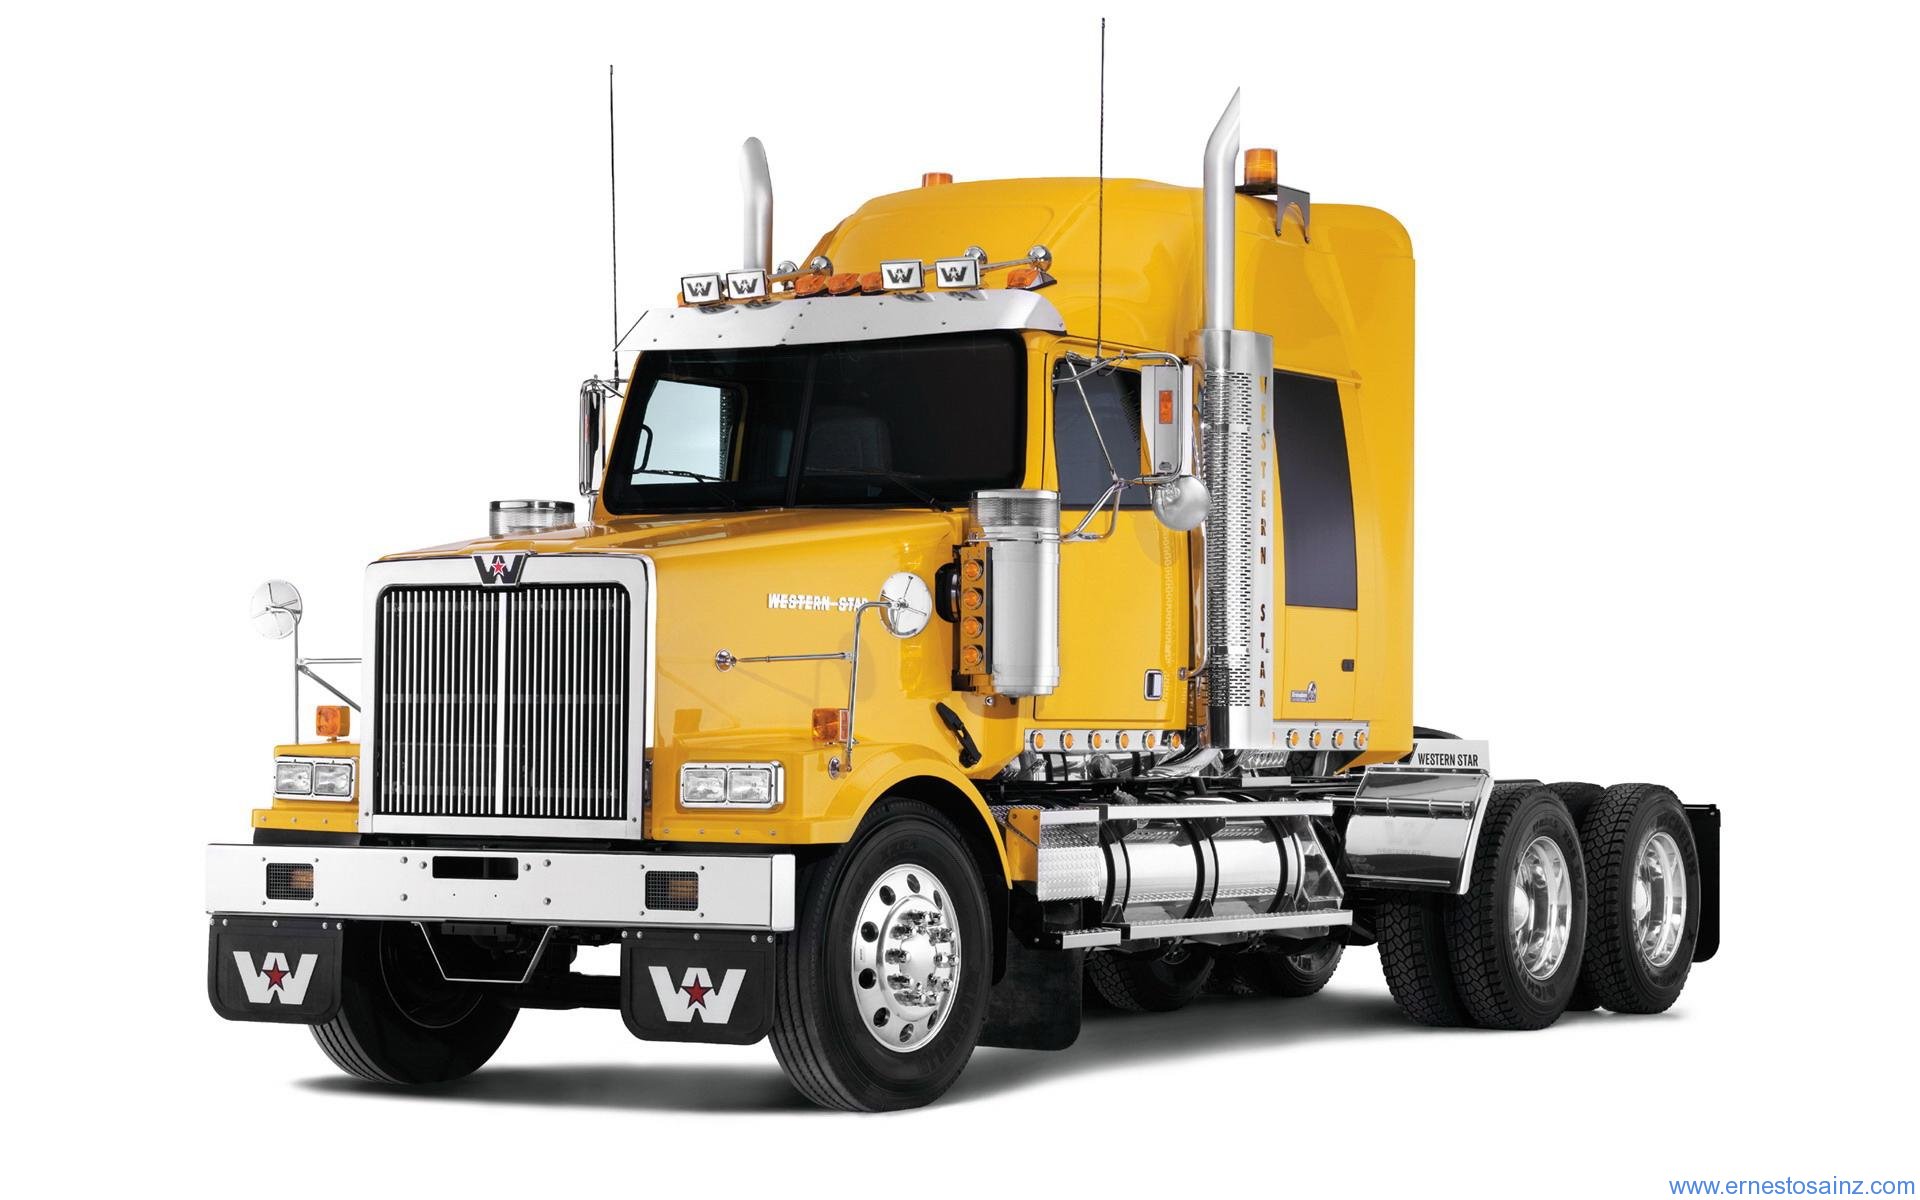 camion-western-amarillo